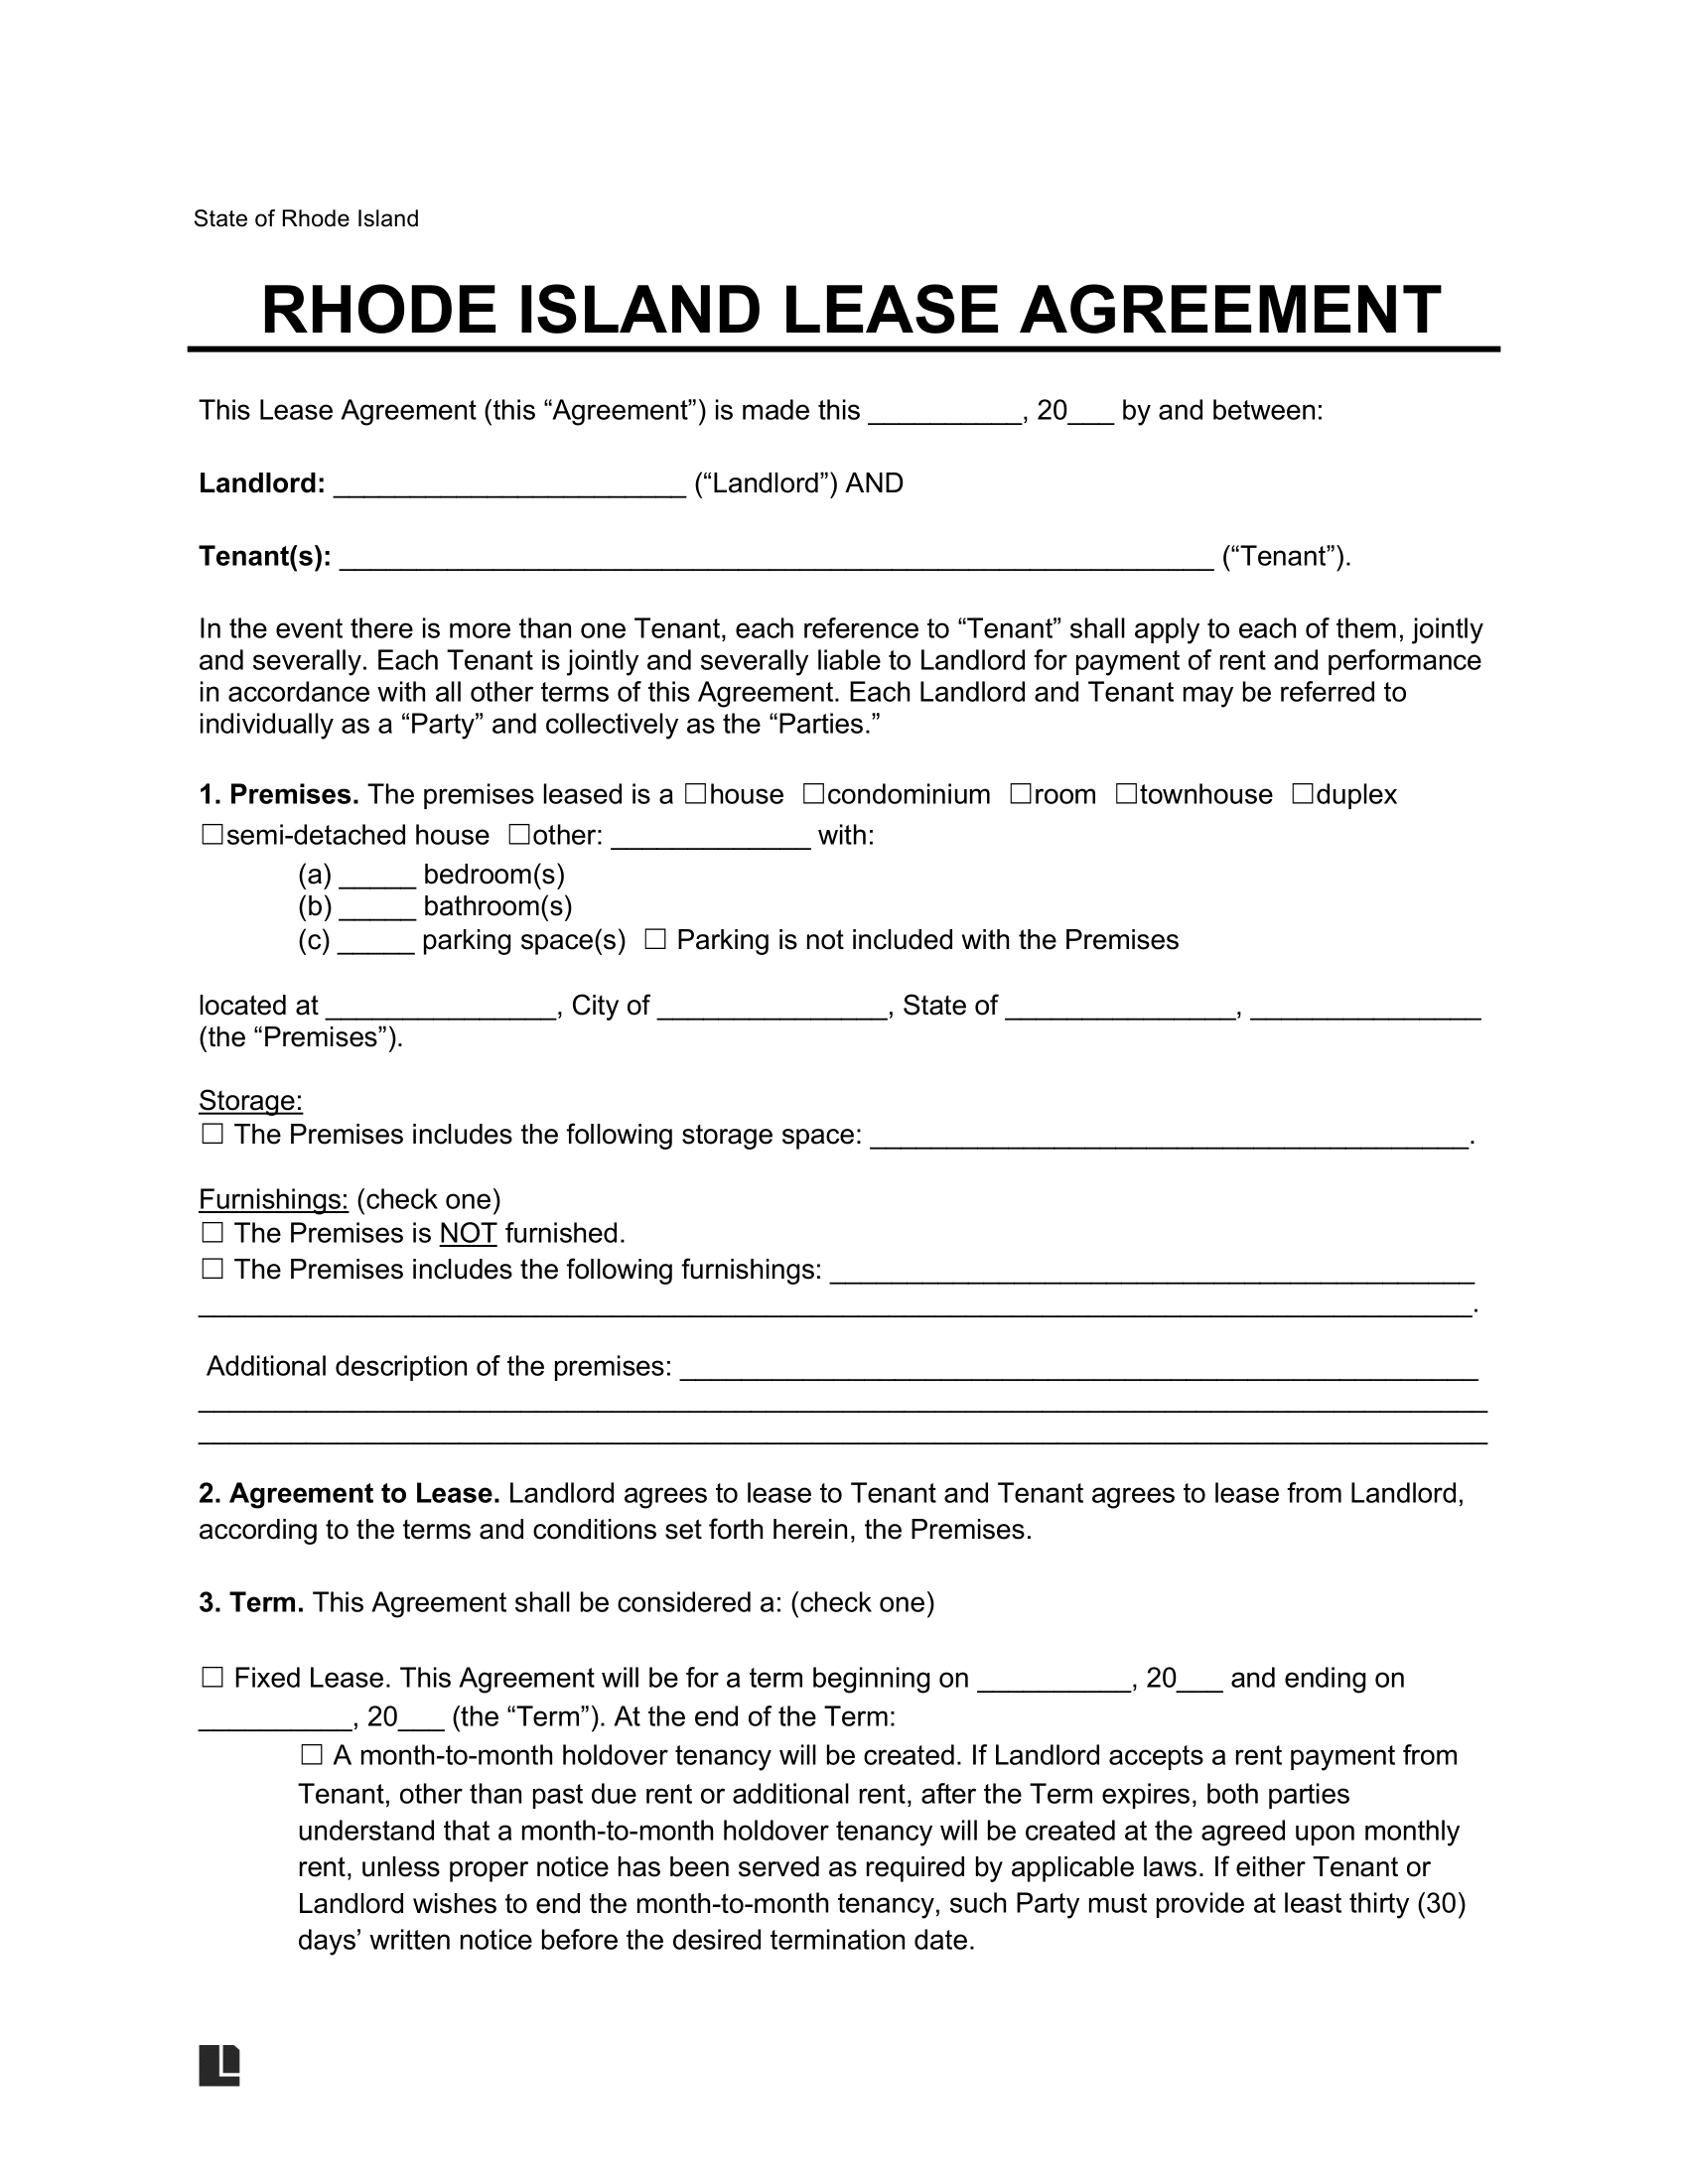 Rhode Island Lease Agreement Template